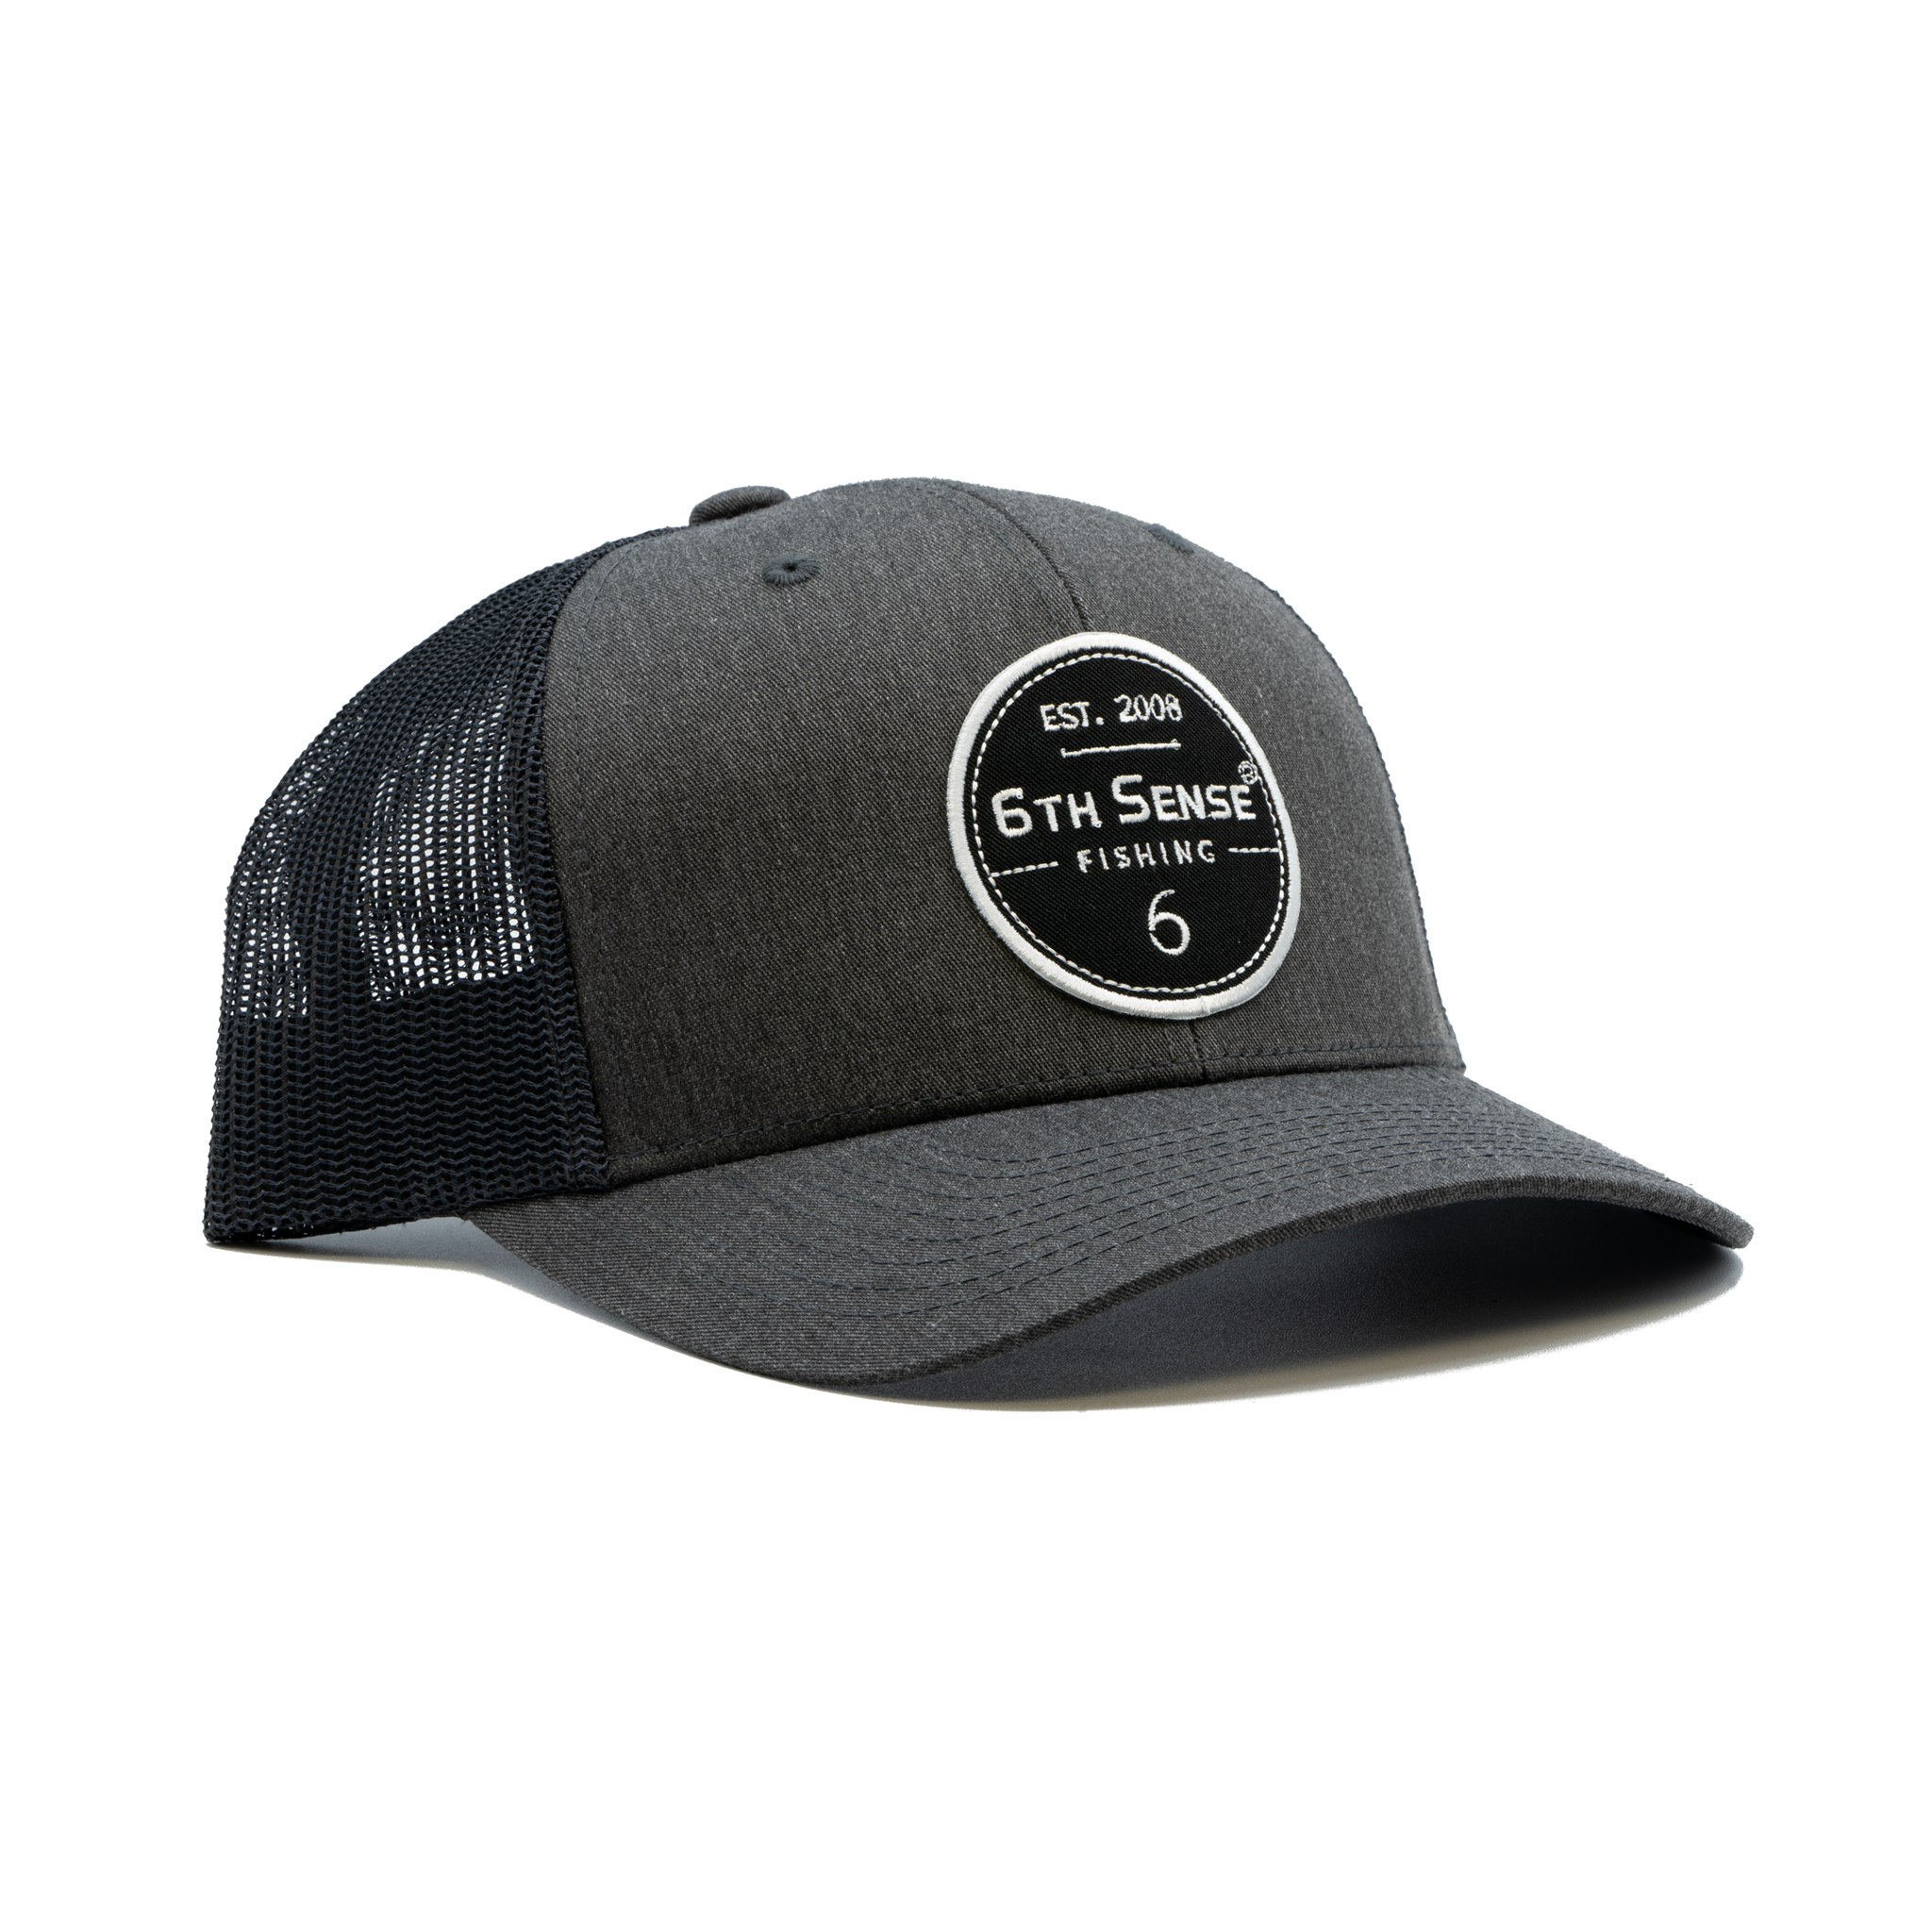 6th Sense Fishing - Premium Hats - The 6 - Charcoal/Black